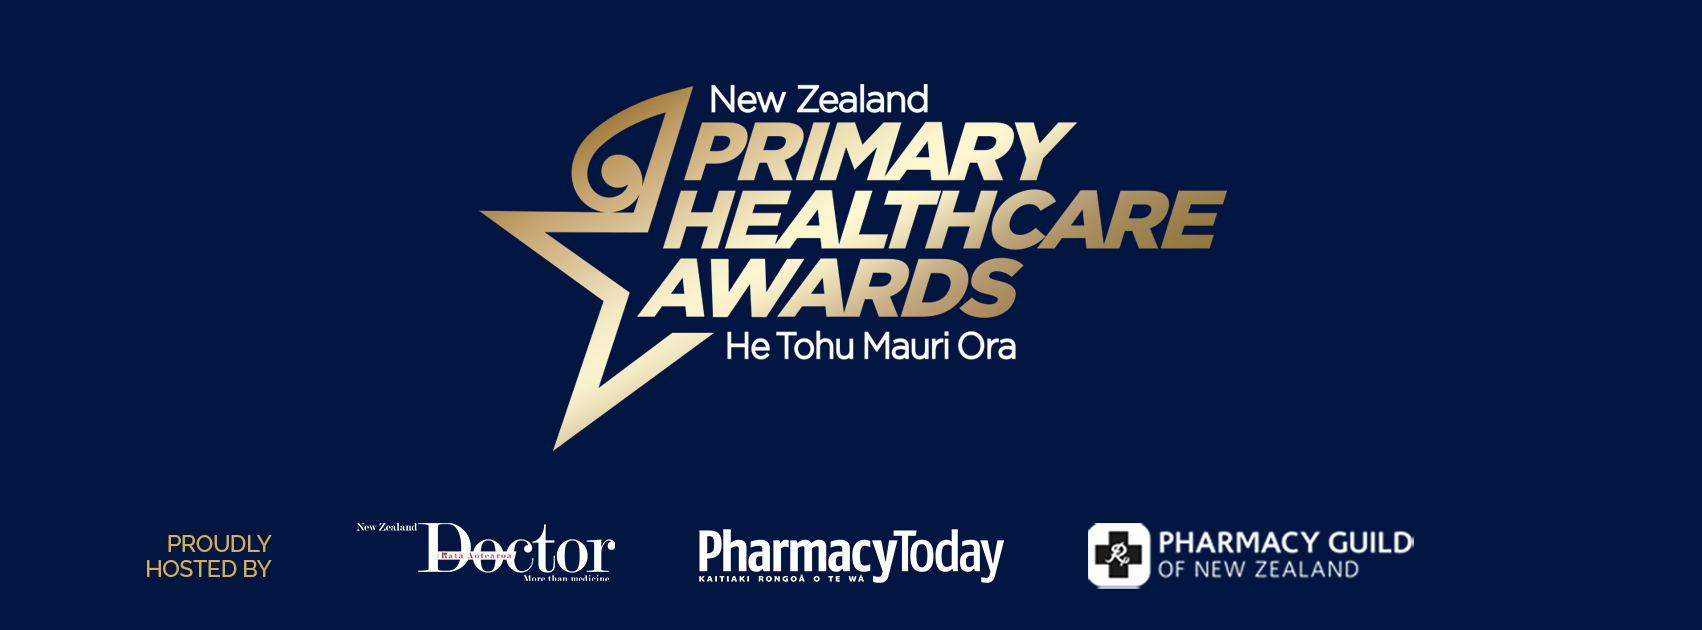 New Zealand Primary Healthcare Awards | He Tohu Mauri Ora 2020 header